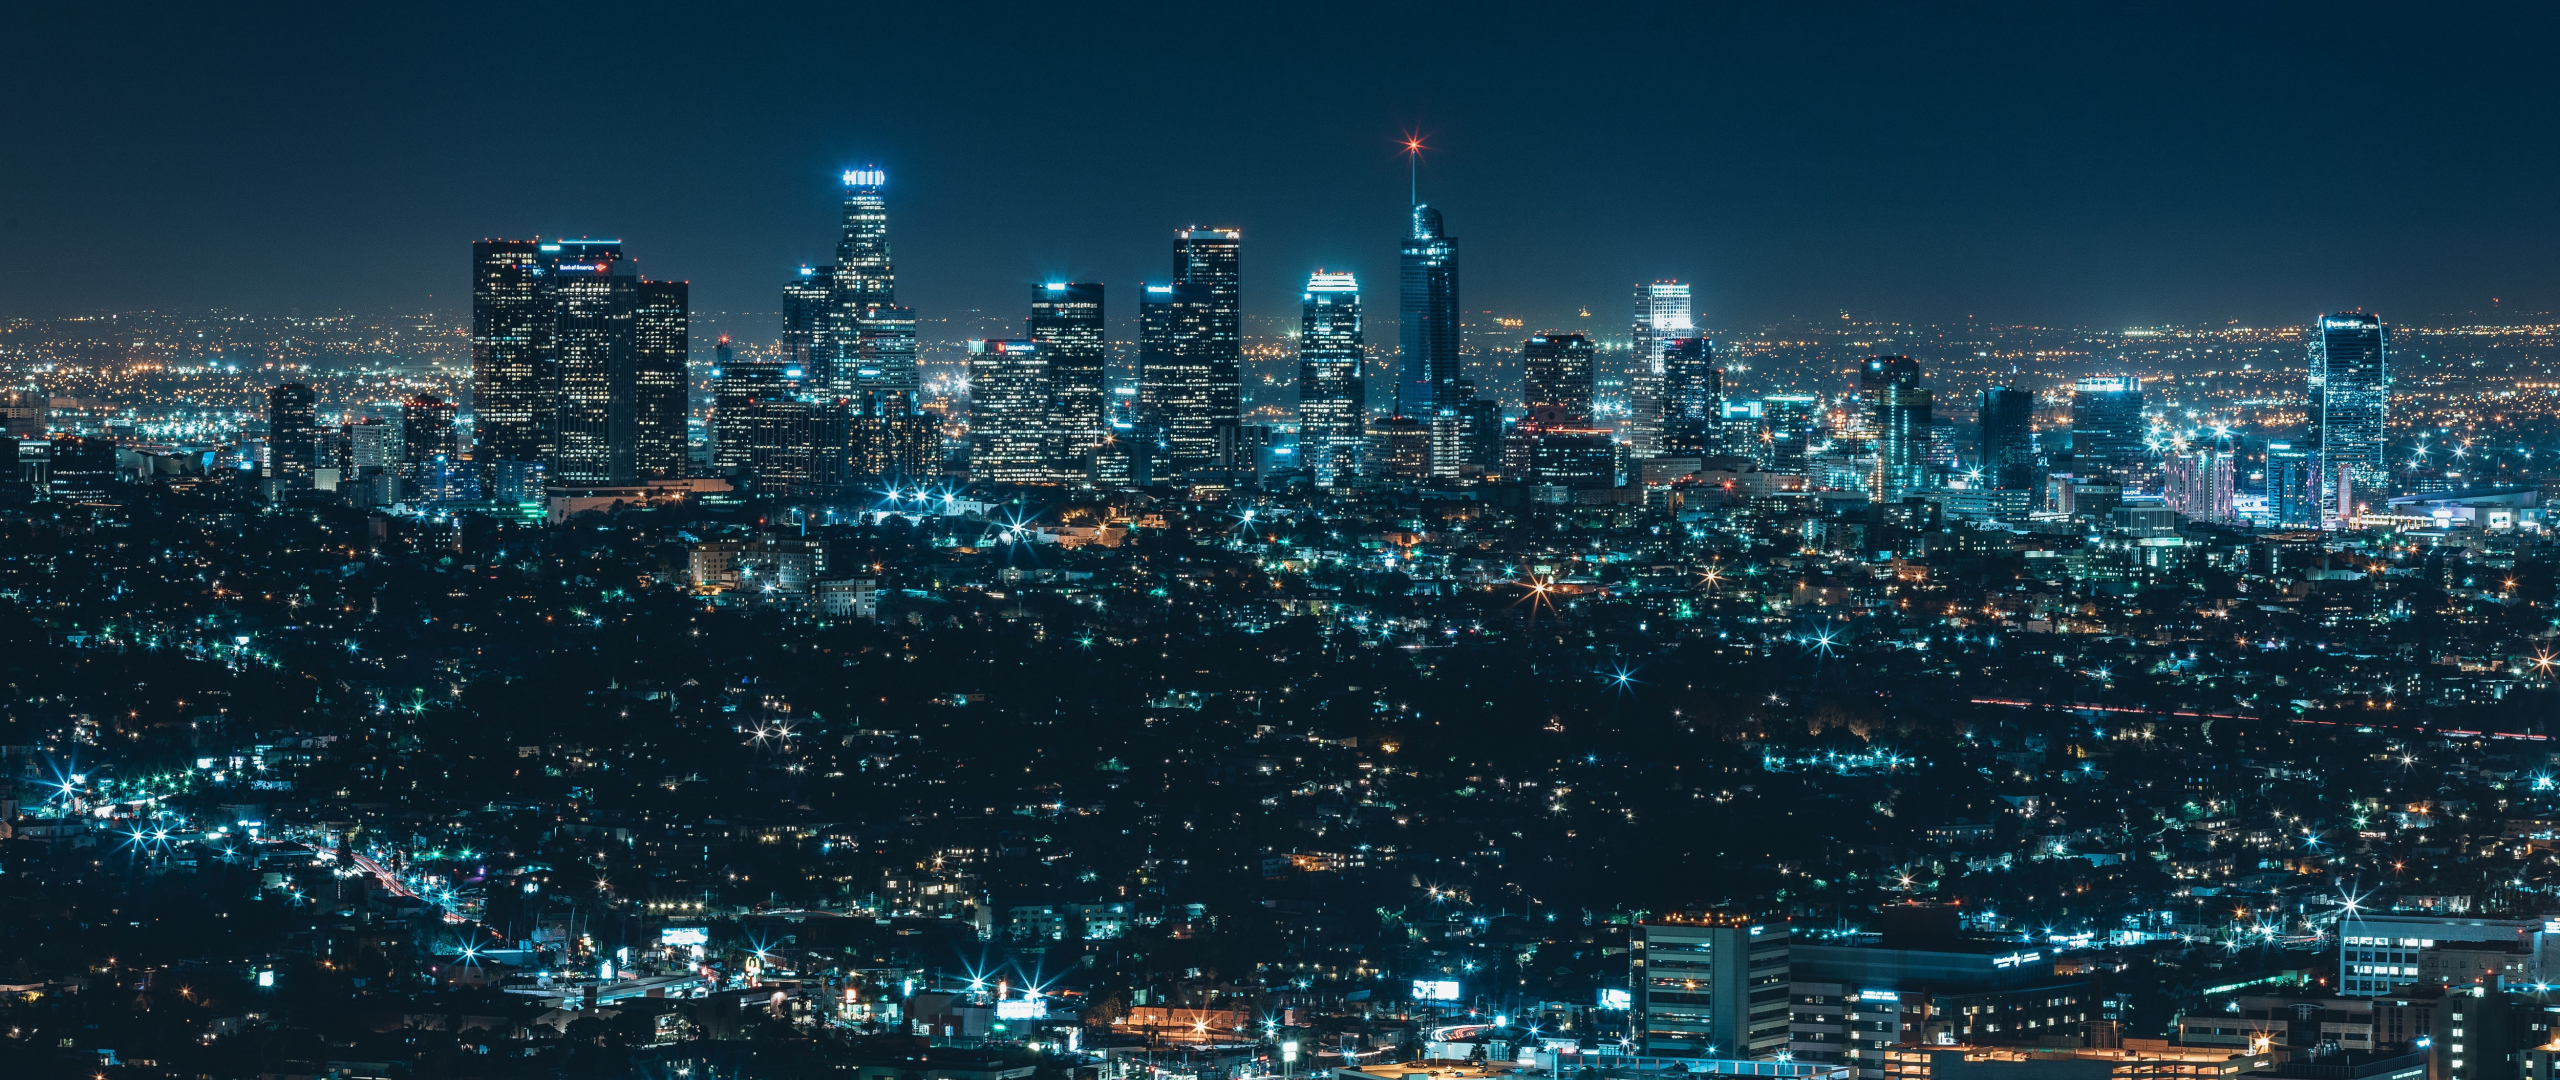 Los Angeles City Night View 2K wallpaper download